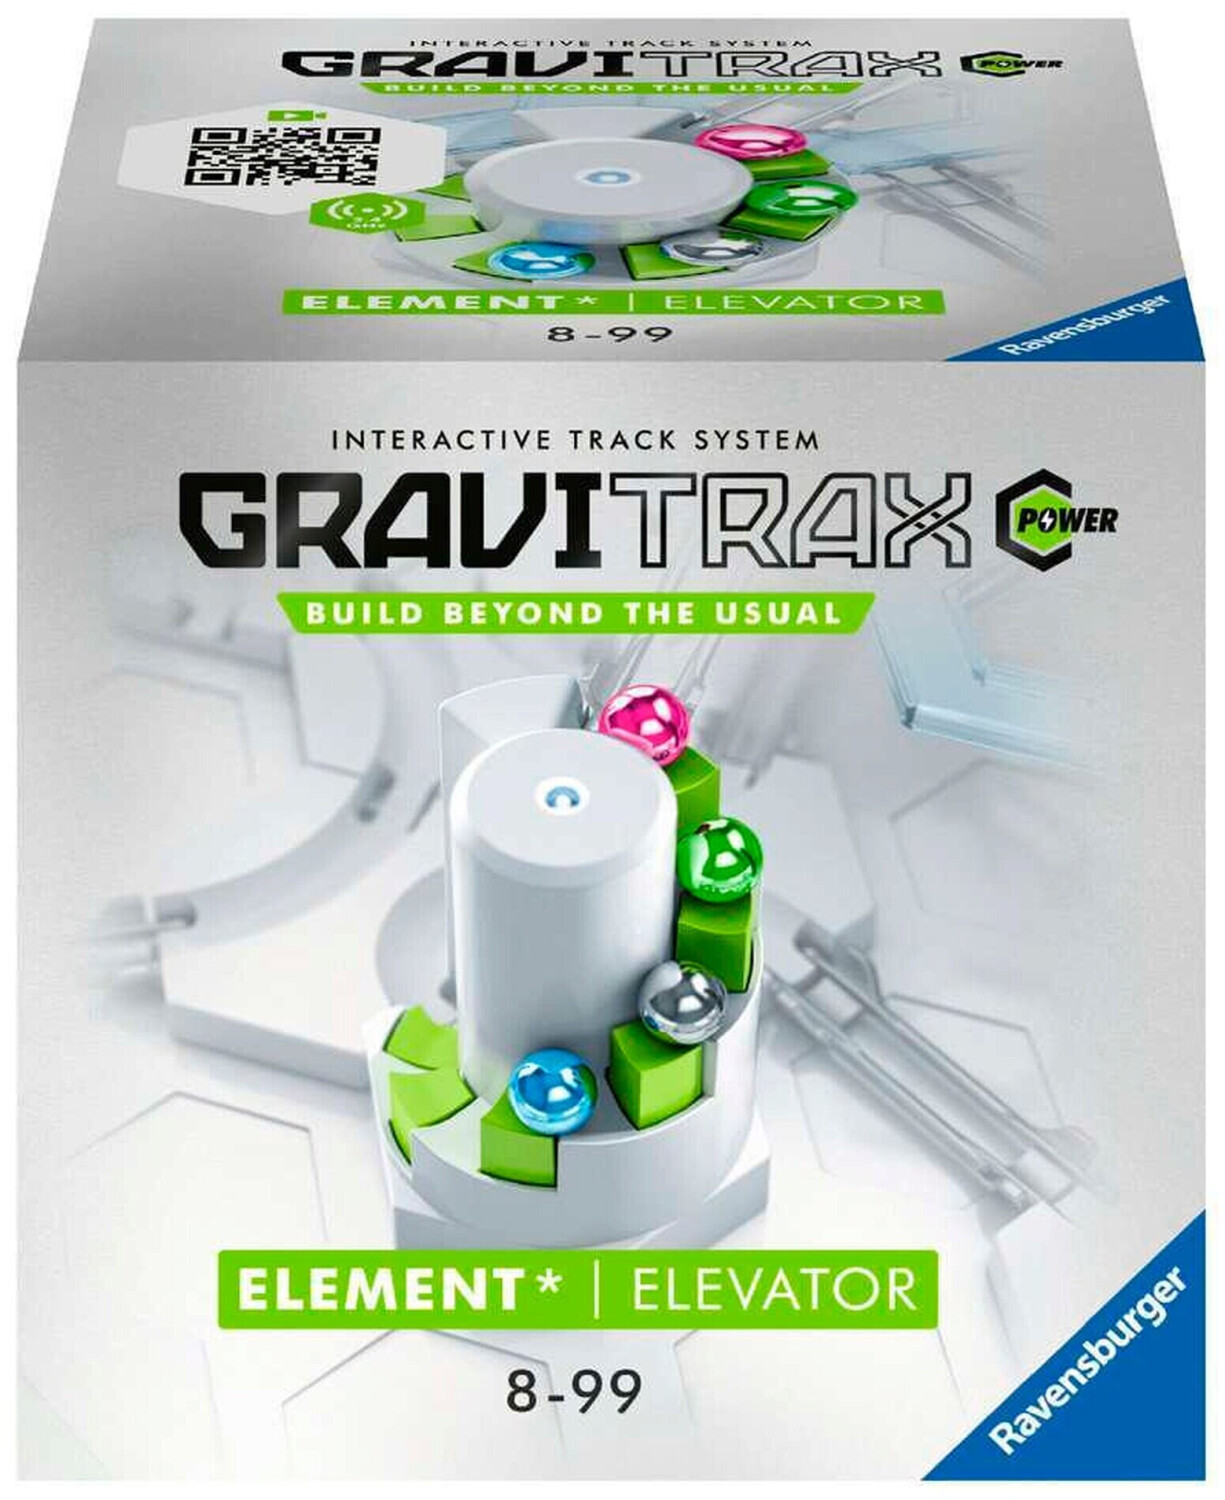 GraviTrax Power Element - Elevator a € 13,99 (oggi)